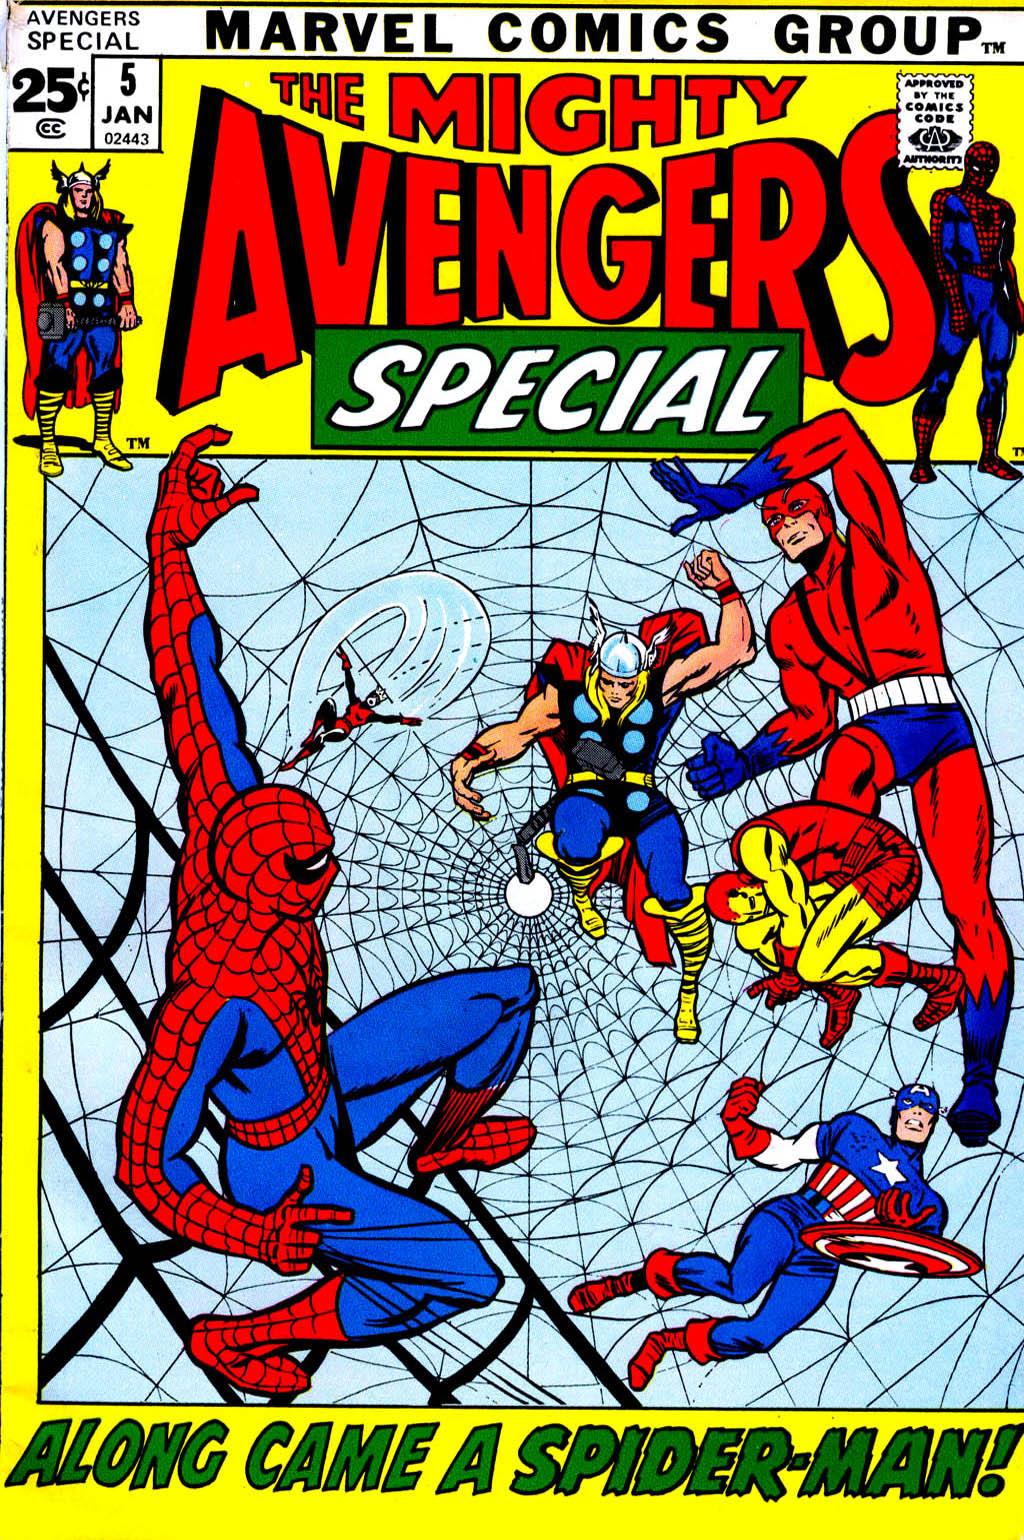 The Avengers Vol. 1 #5